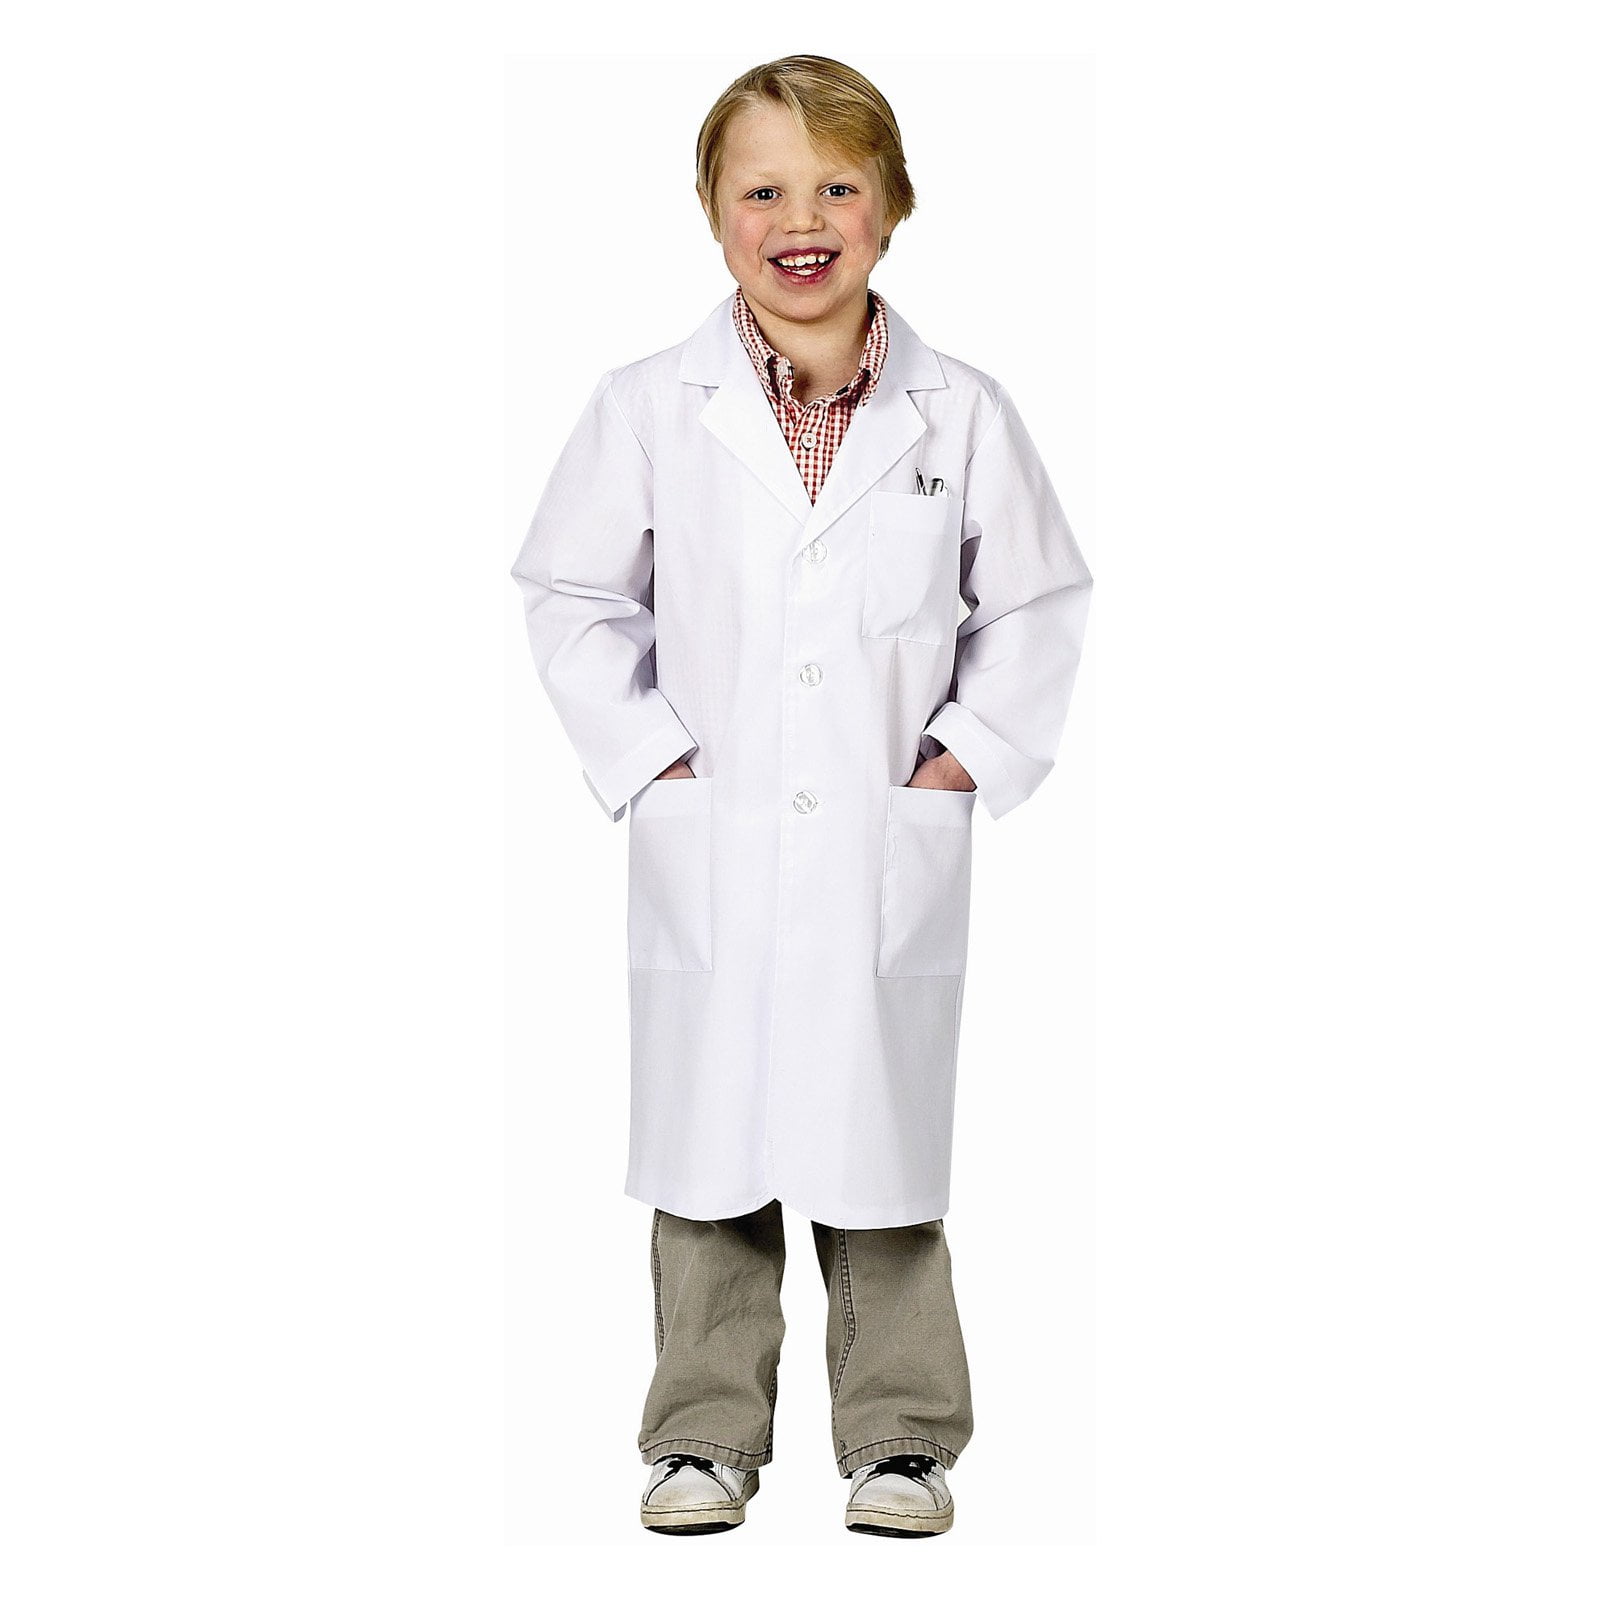 L S M XL The Good Doctor Costume Childs Girls Boys Surgeon Veterinarian 